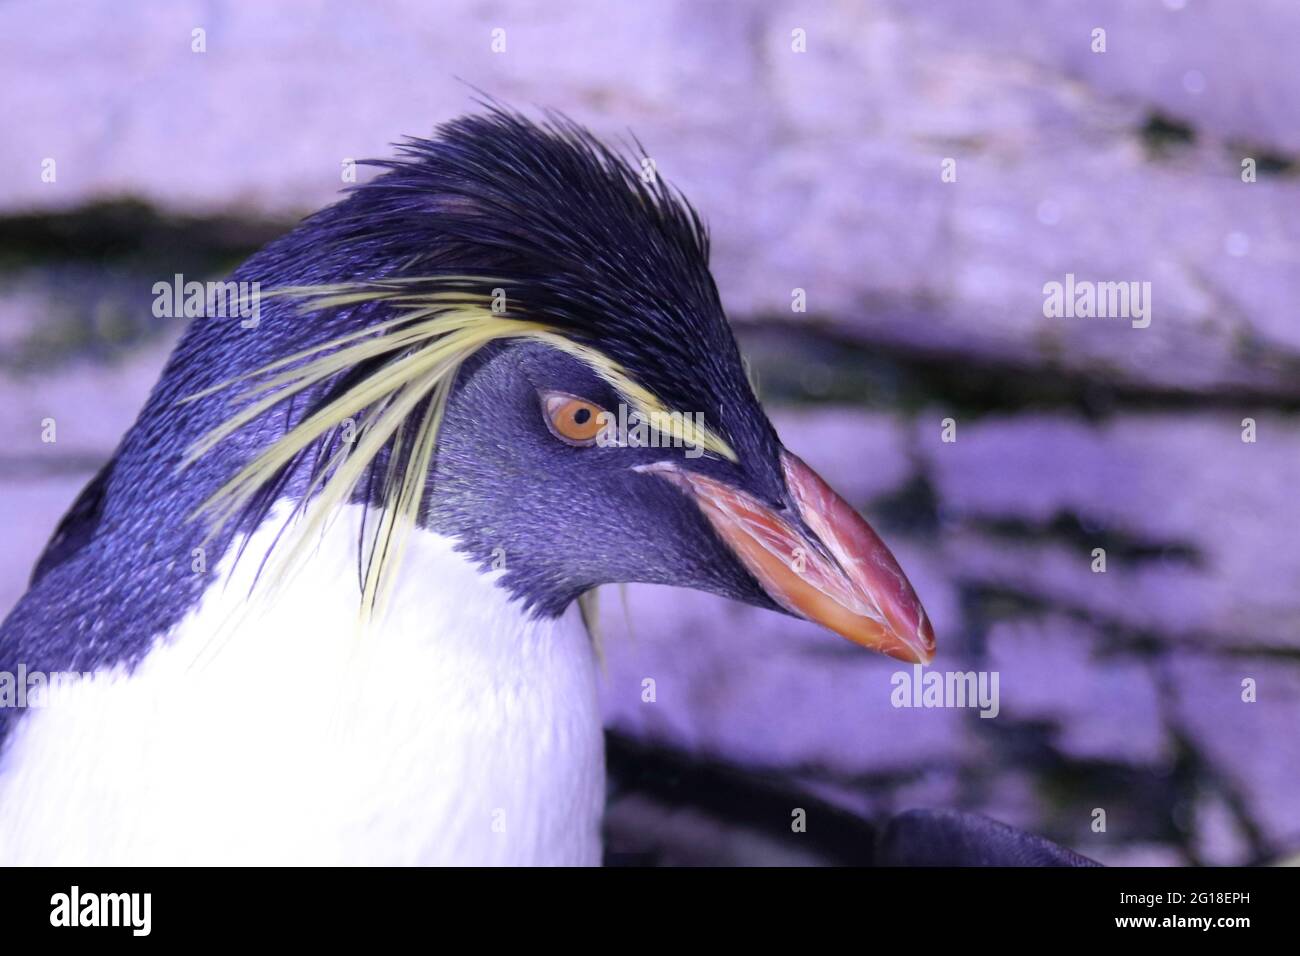 Nördlicher Felsenpinguin / Northern rockhopper penguin / Eudyptes moseleyi Stock Photo